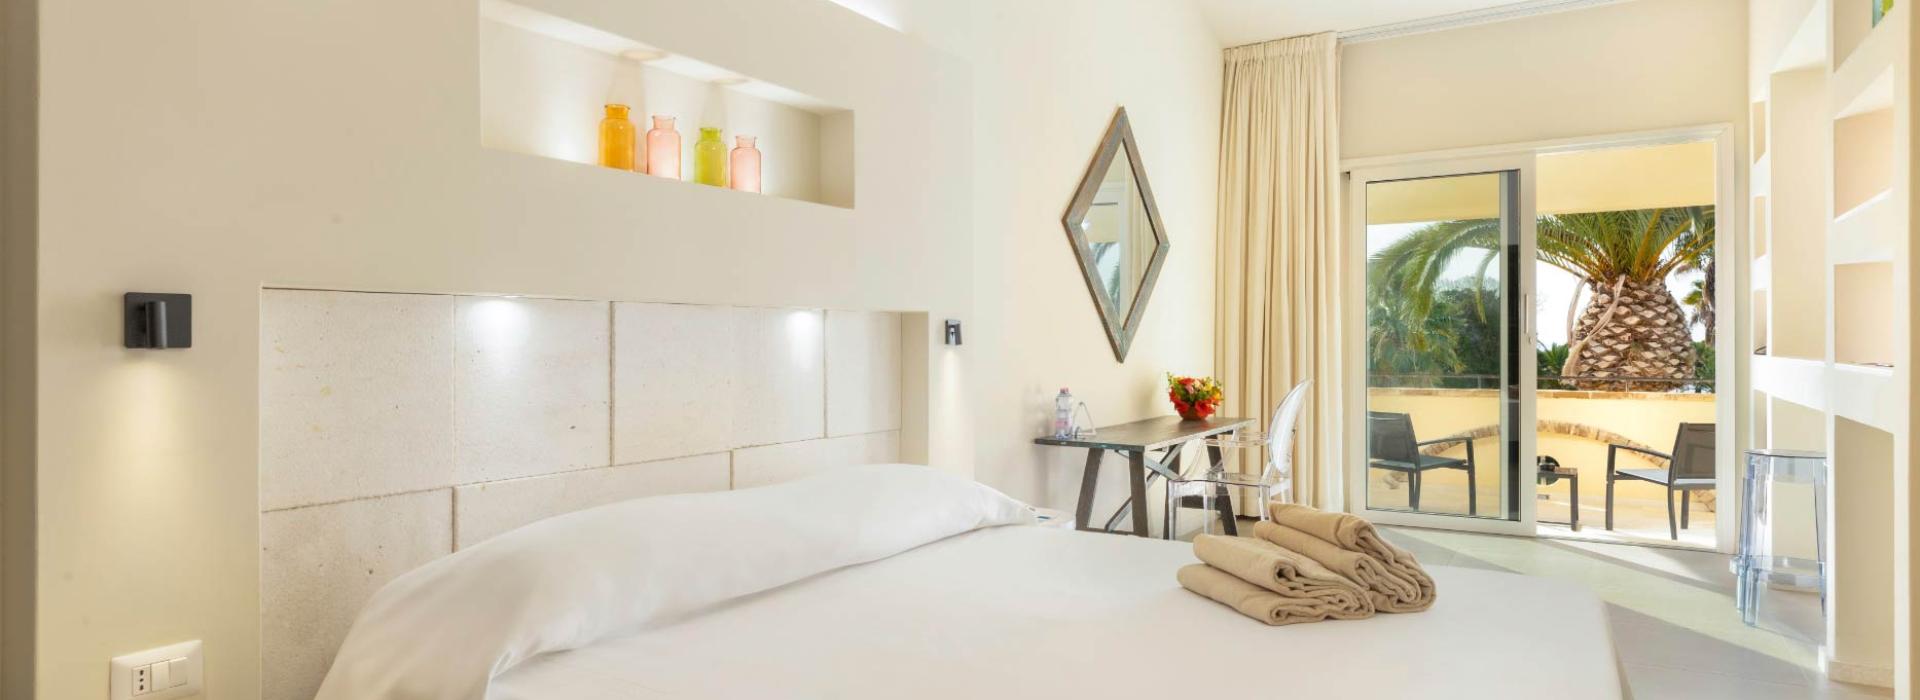 costadeifiori en sardinia-resort-rooms-with-jacuzzi 003